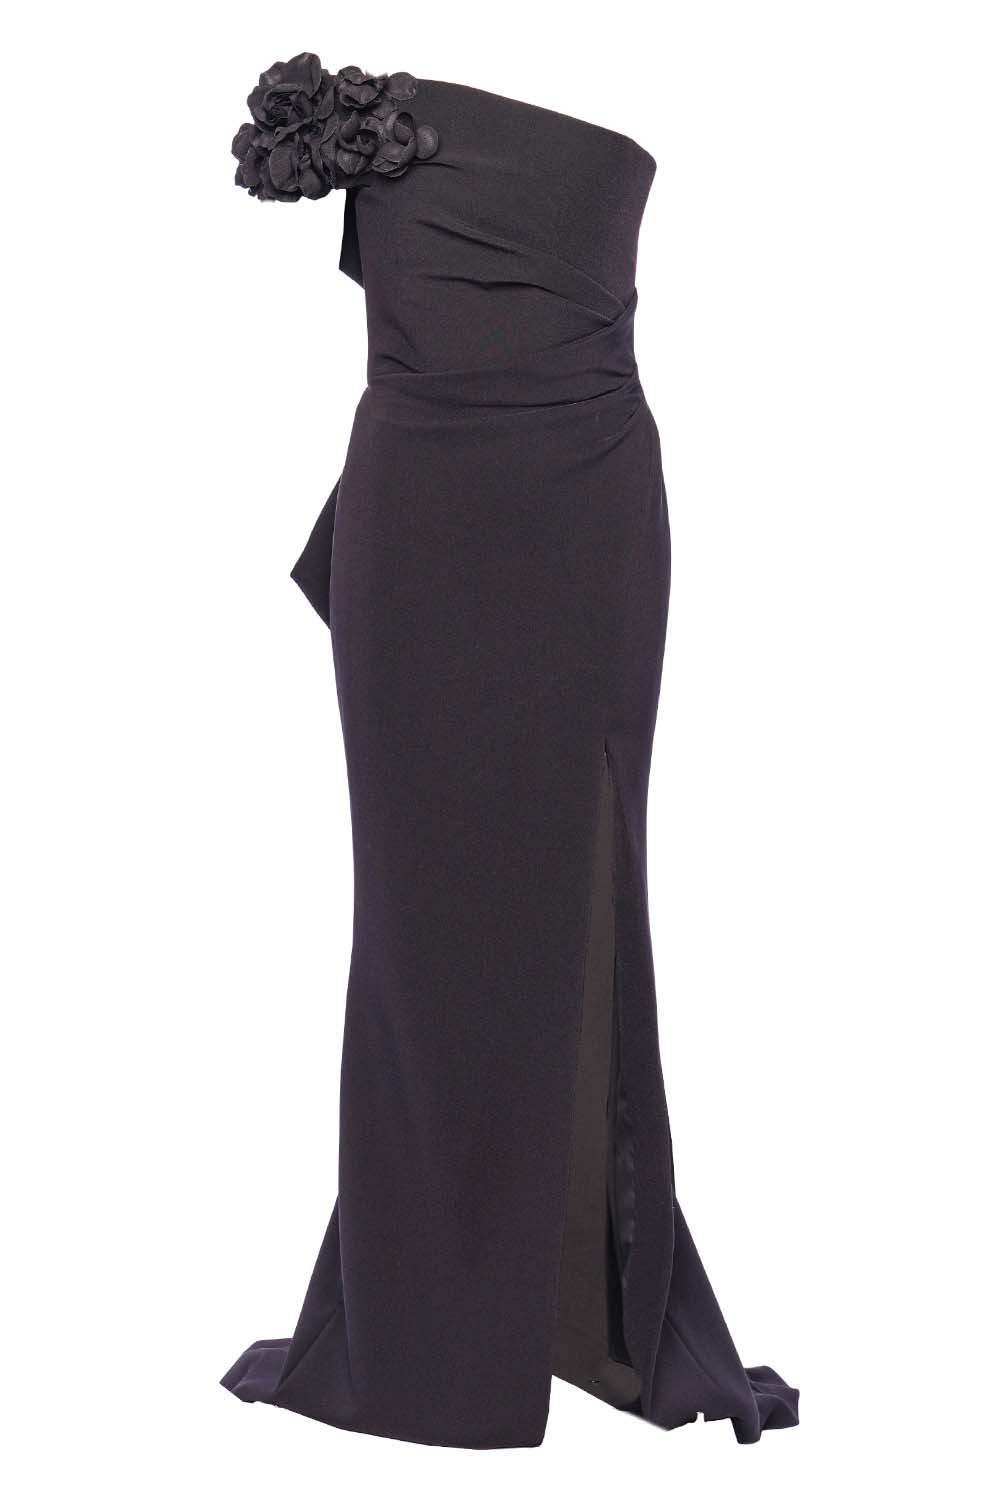 Marchesa Black One Shoulder Crepe Gown MI37815 BLACK